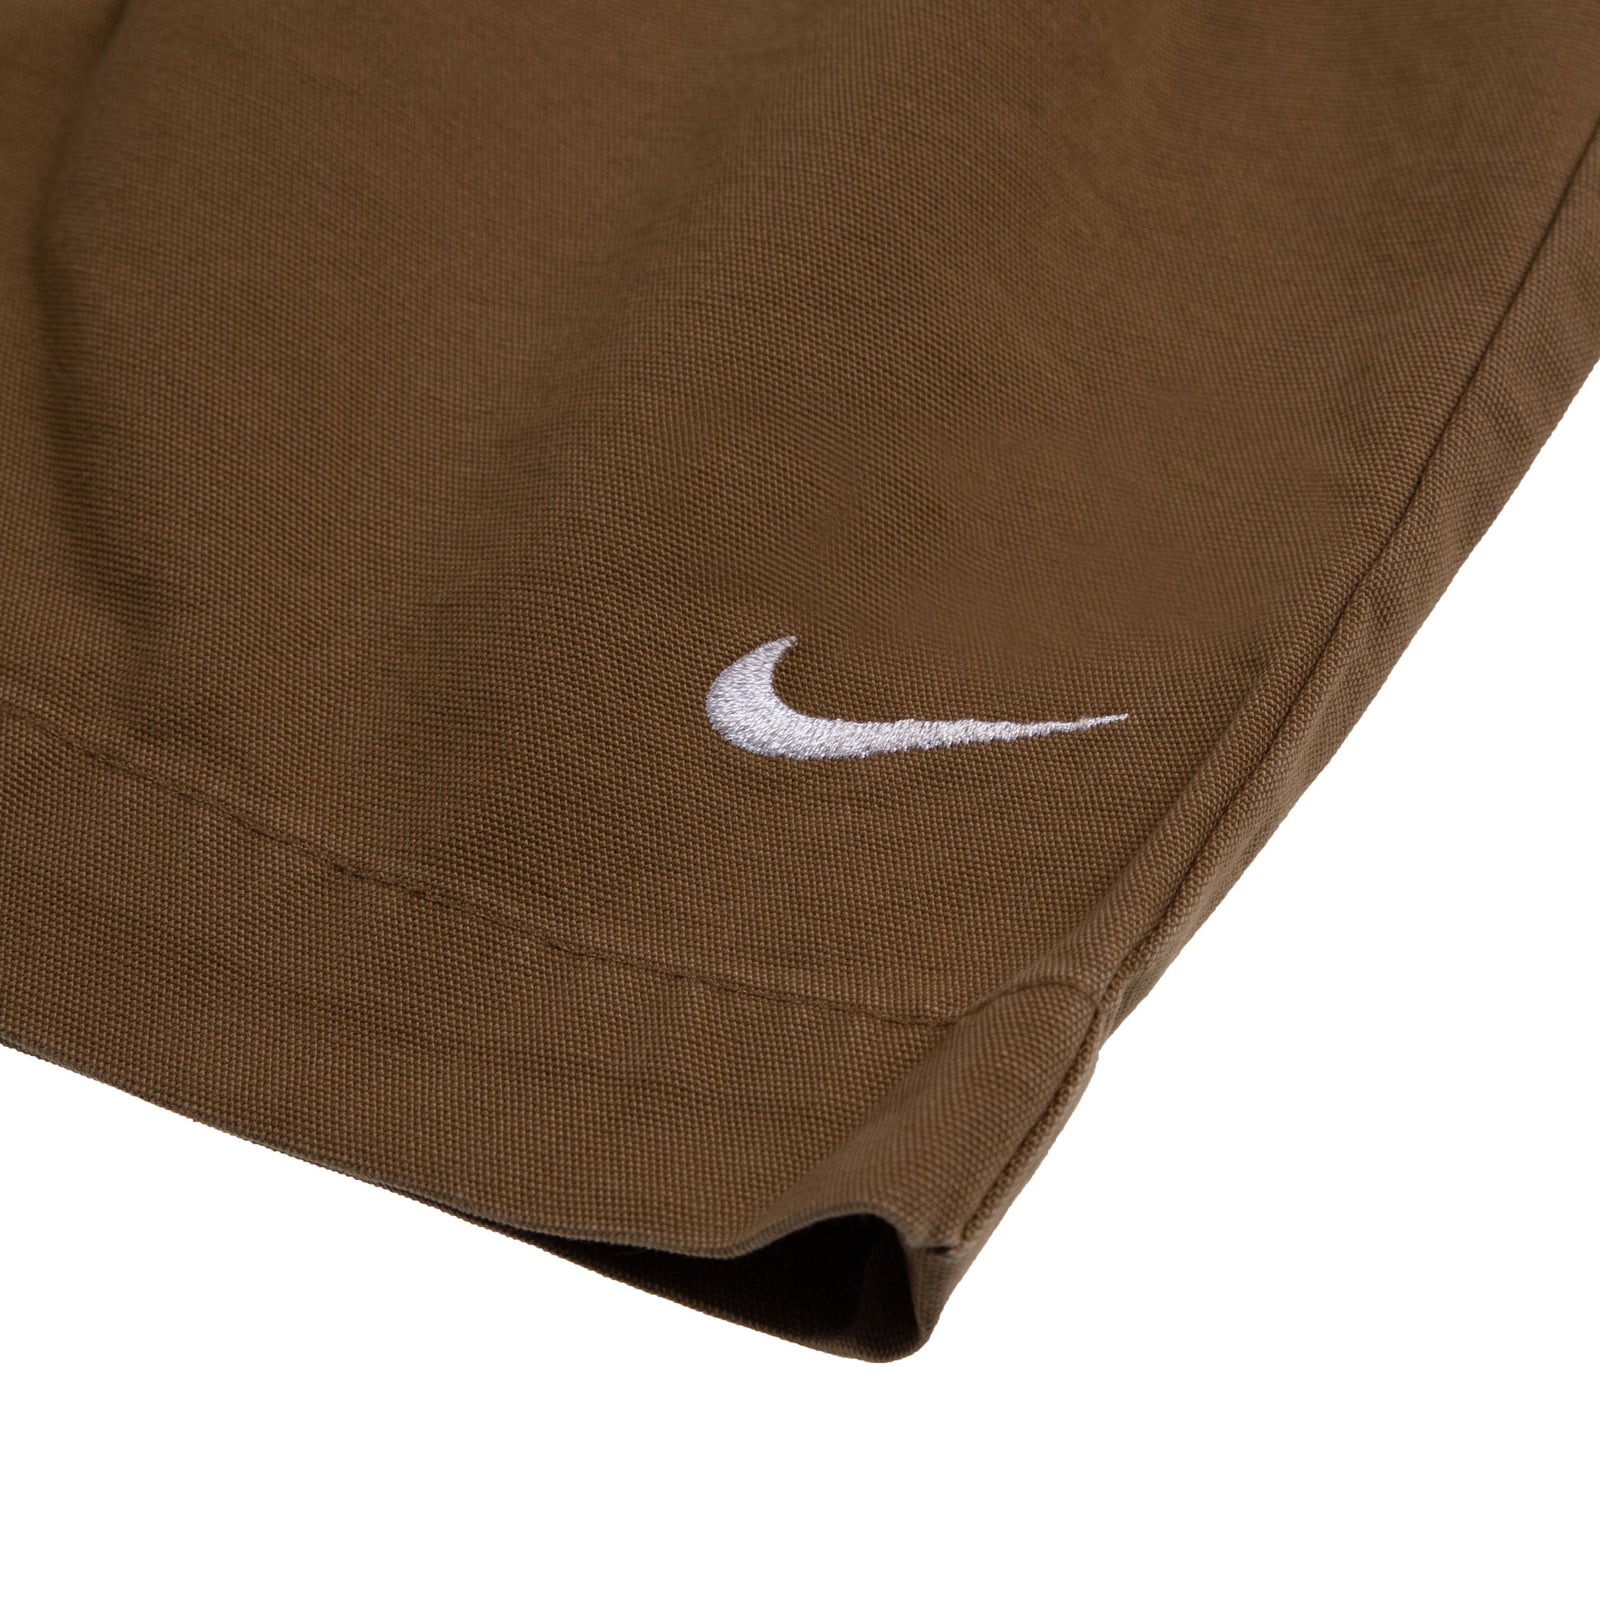 Nike Life Pleated Chino Short
Brown / White